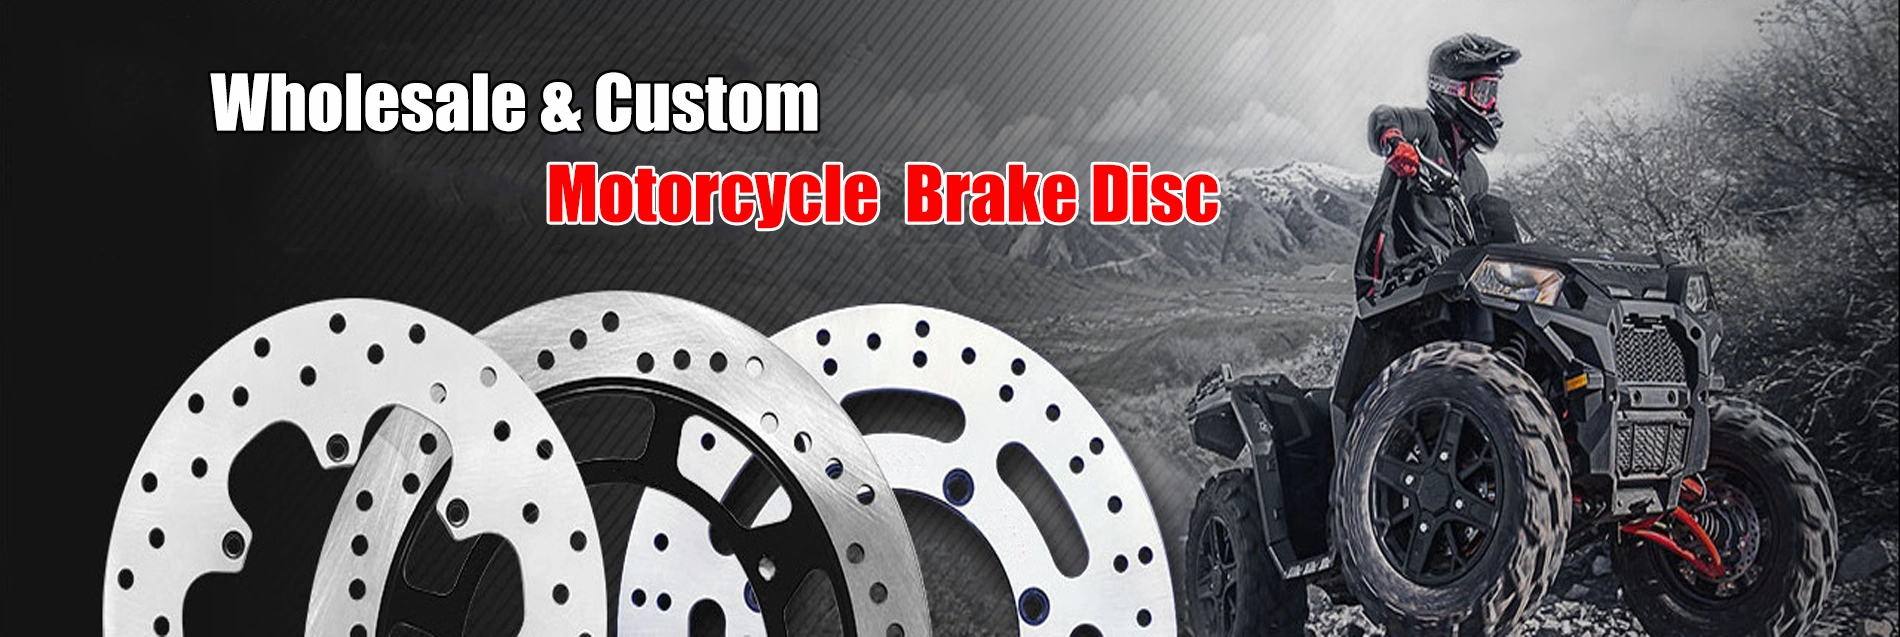 Custom rear 220mm motorcycle brake disc for Yamaha Road